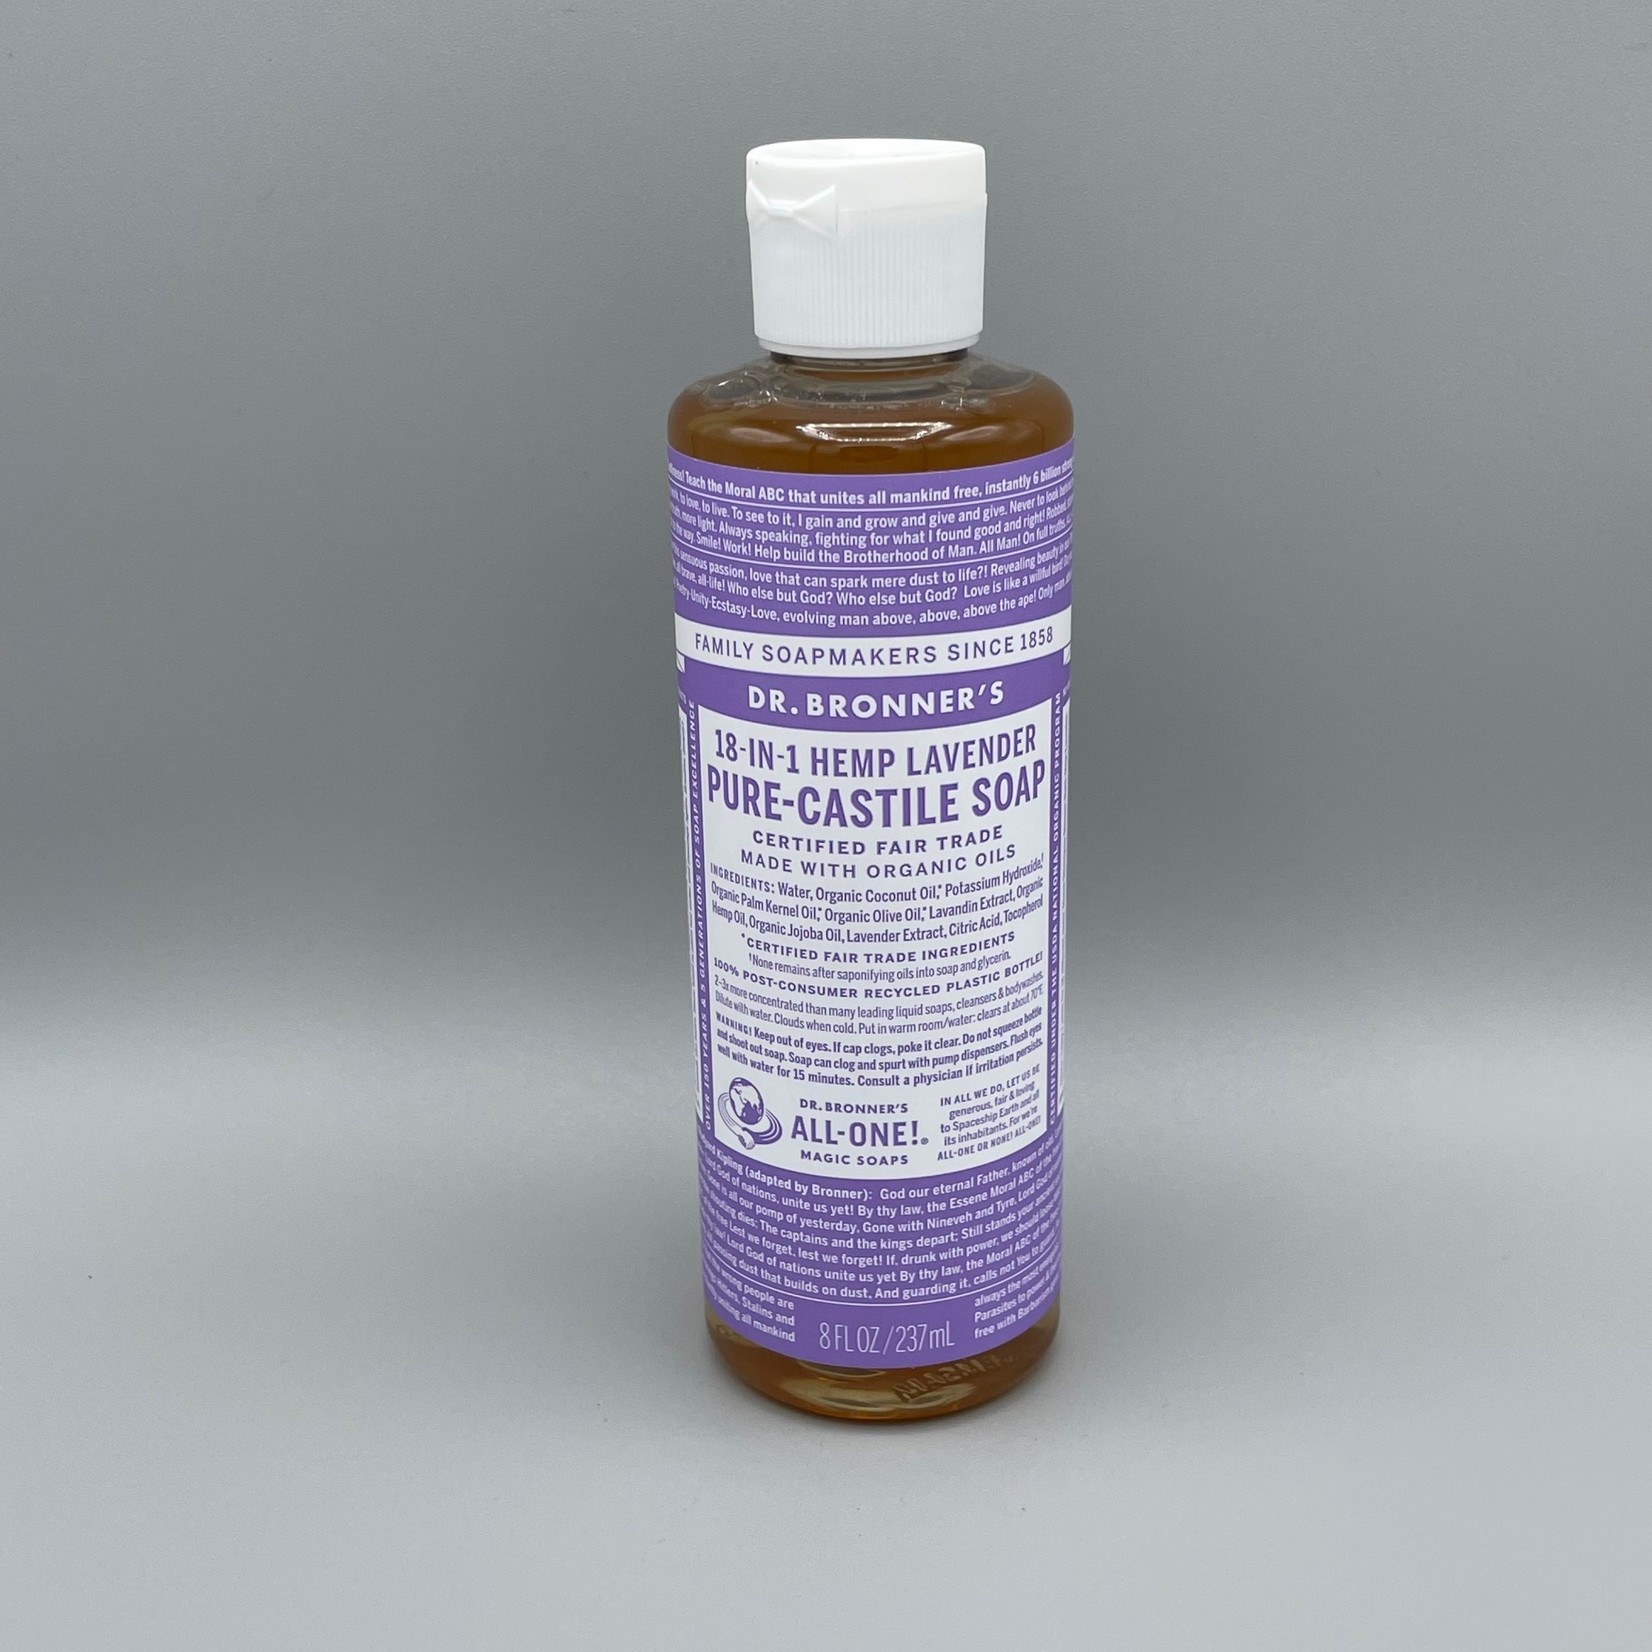 Dr. Bronner's Pure-Castile Liquid Soap: